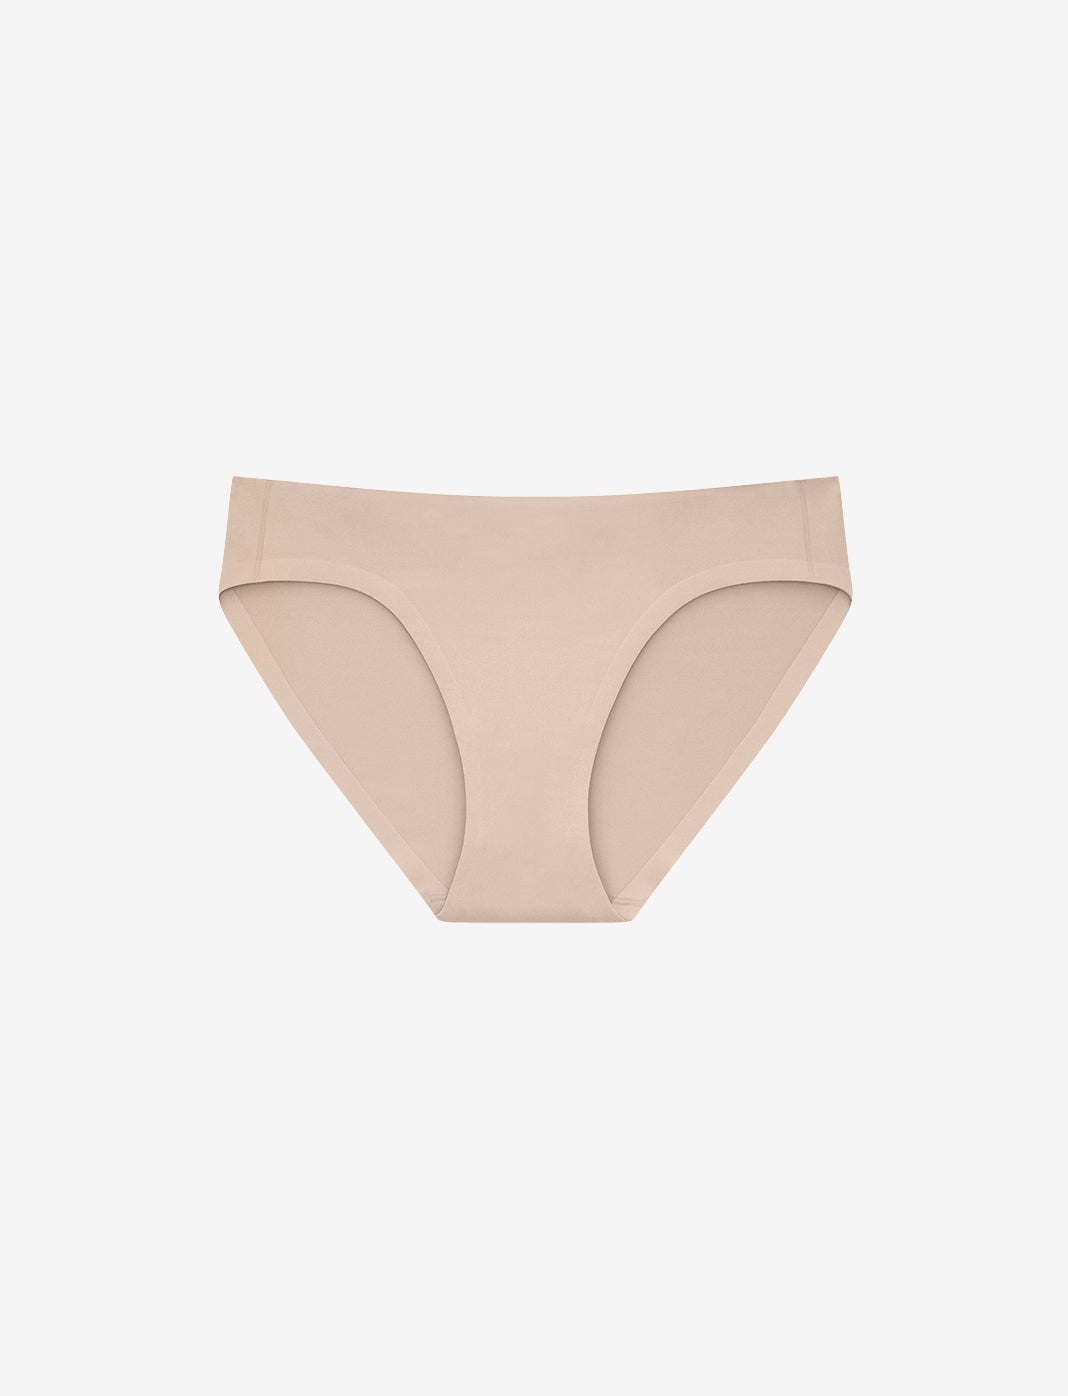 Women's Seamless Underwear - Comfortable Seamless Panties for Women